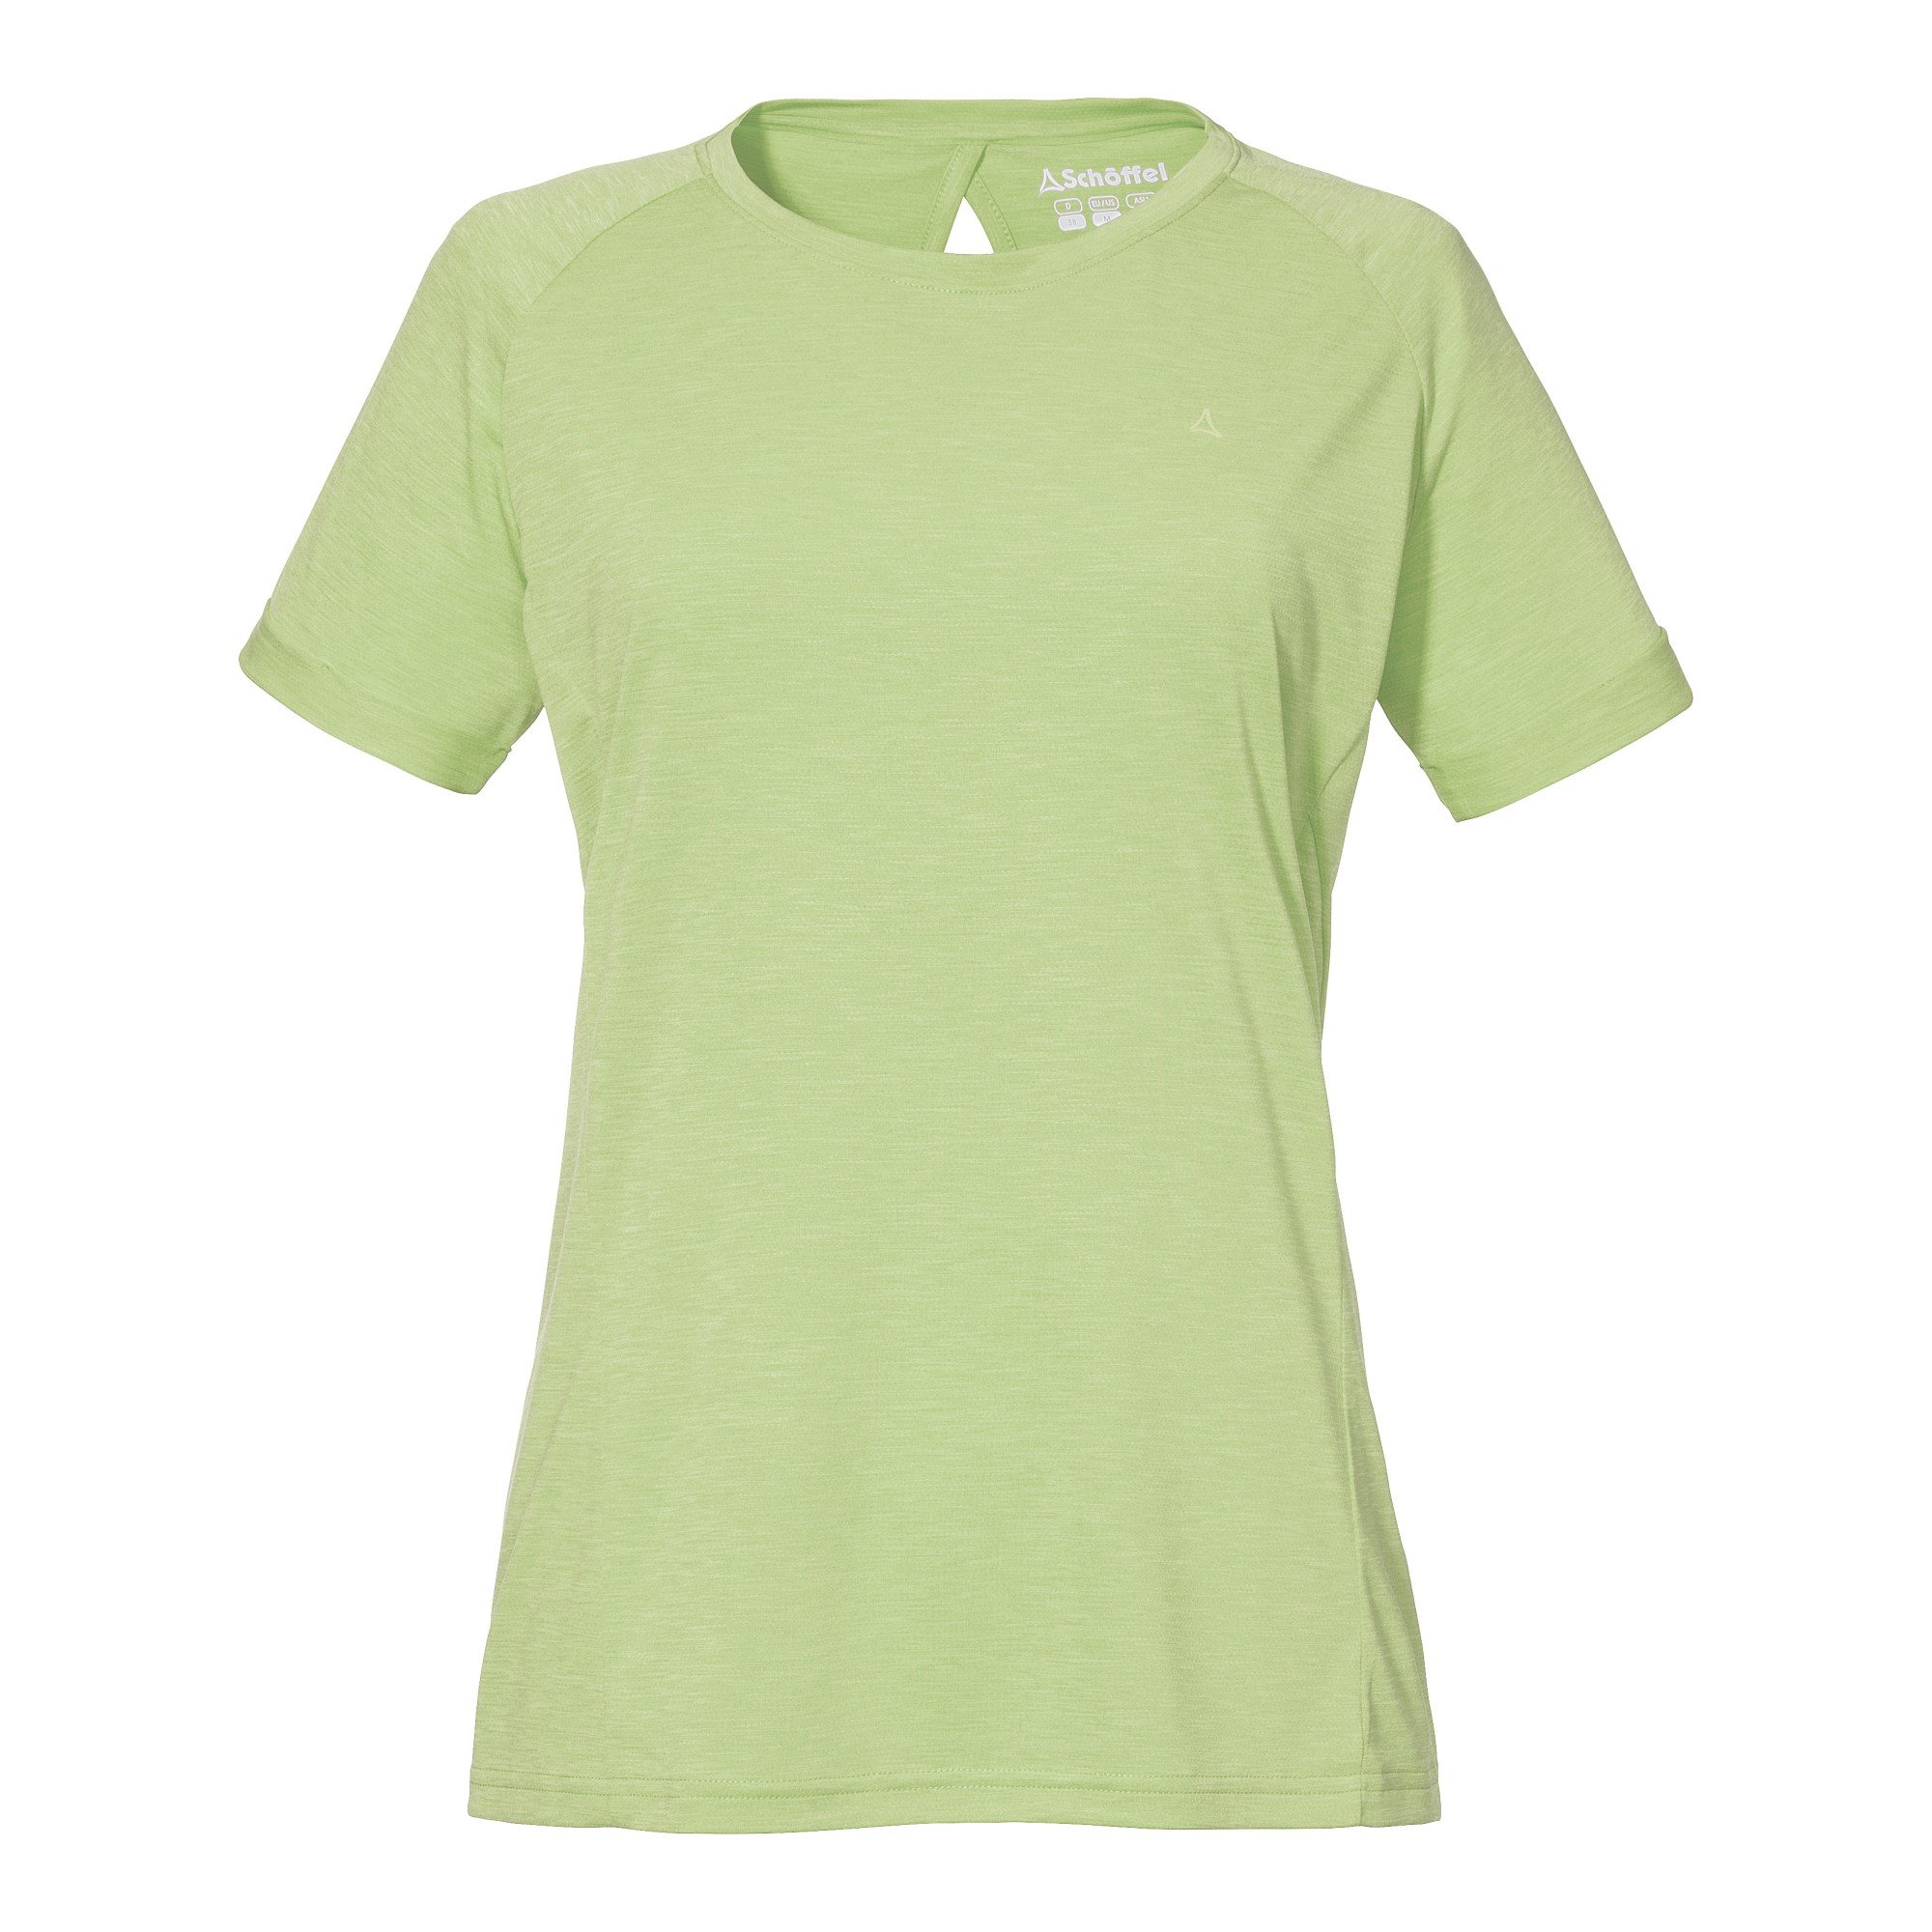 € Shirt 24,00 (12667_6060), Boise2 green T DAMEN patina SCHÖFFEL L